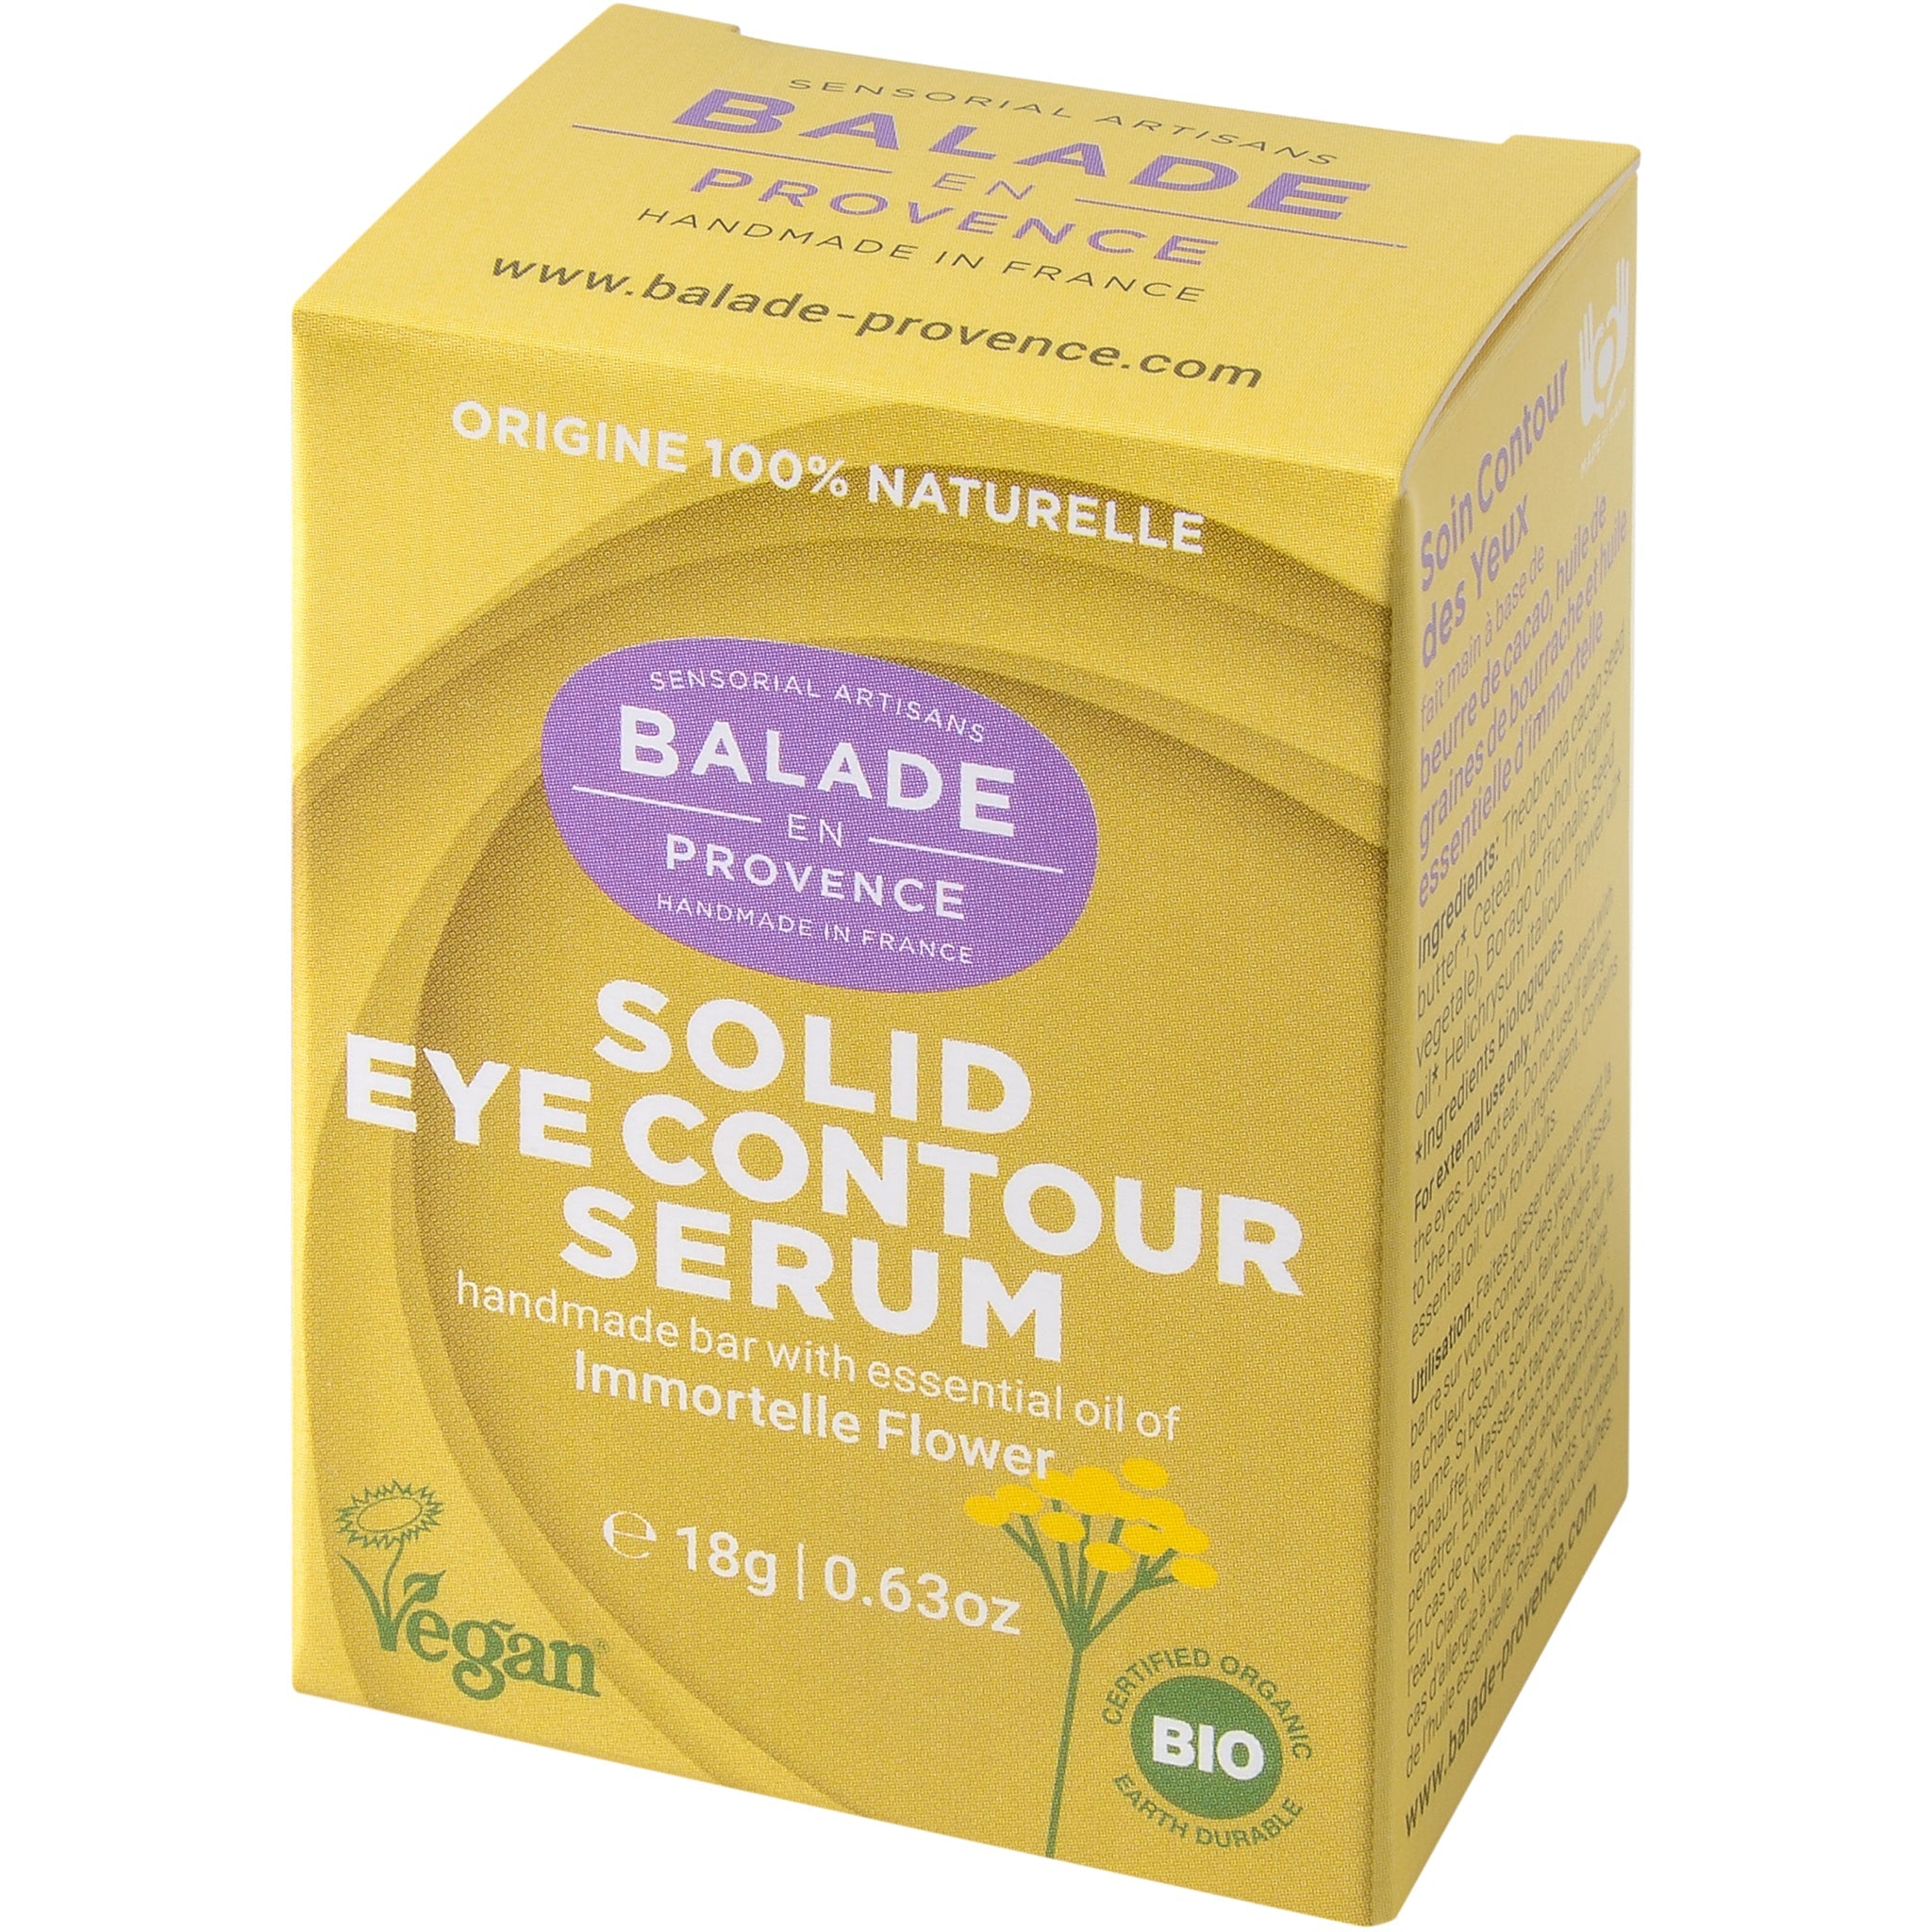 Solid Eye Contour Serum Bar - mypure.co.uk